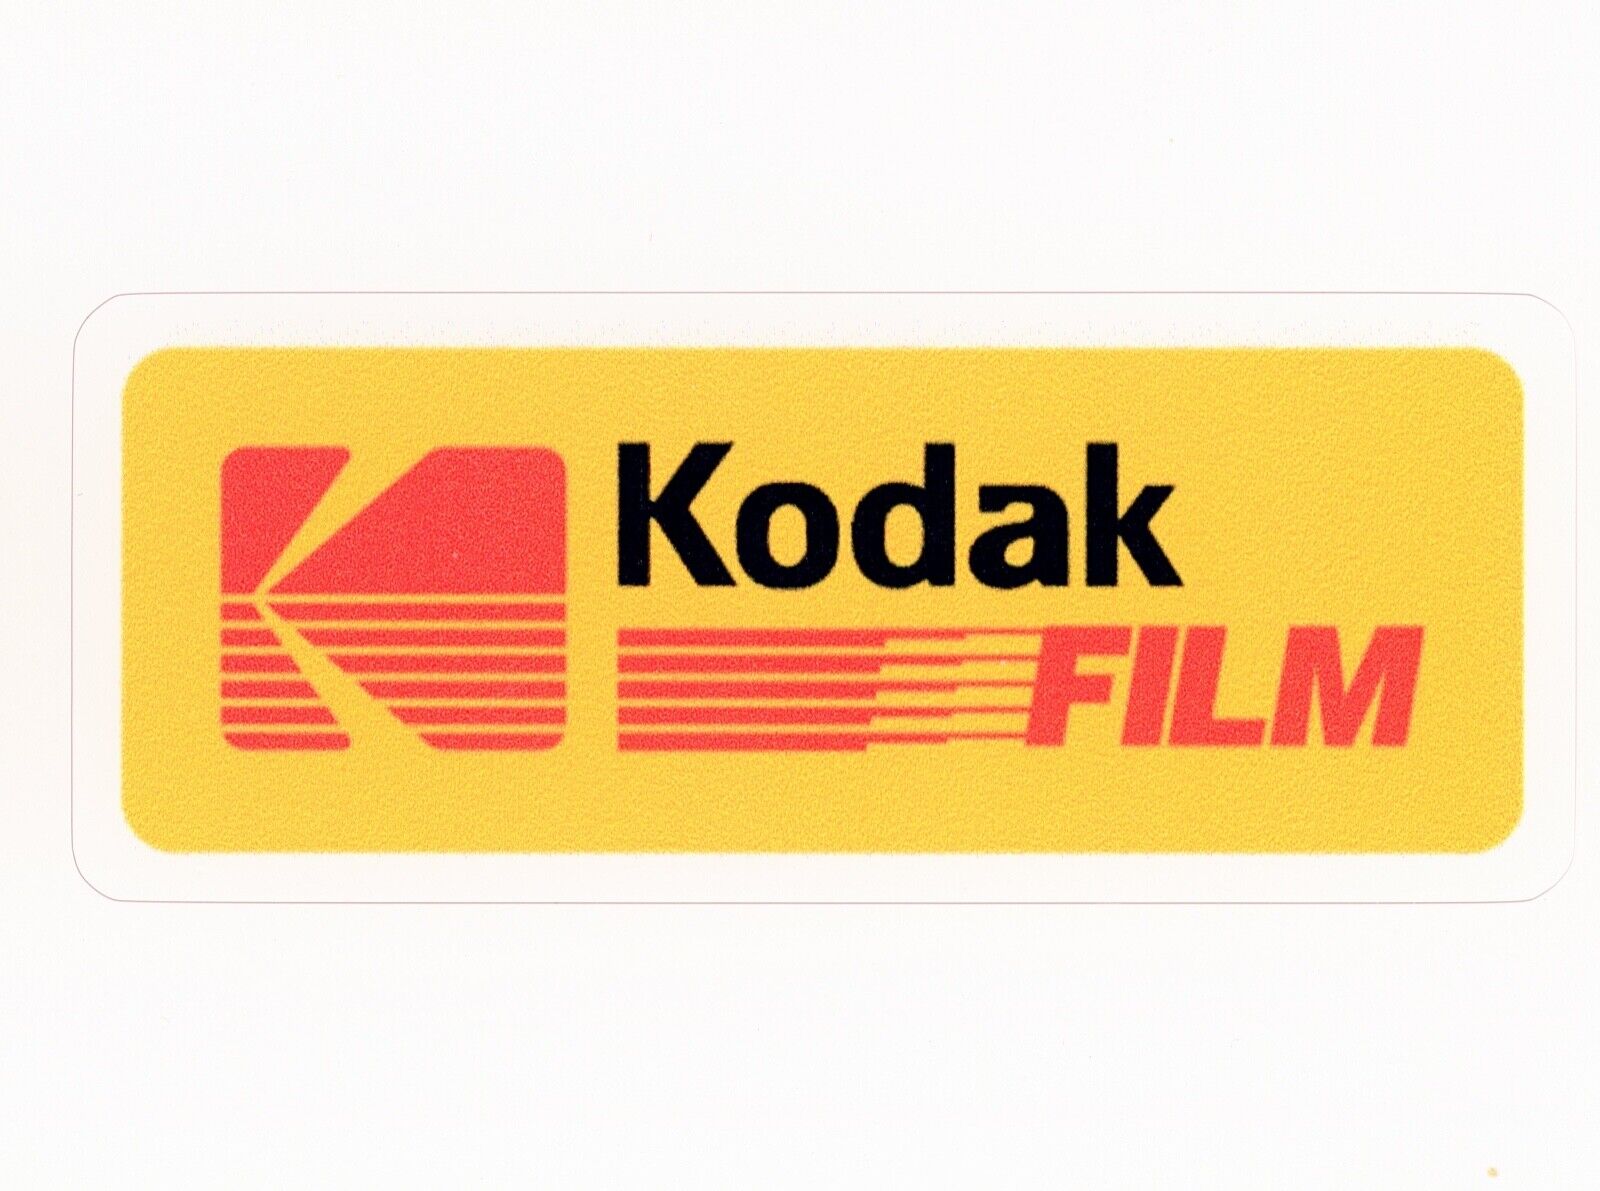 Kodak Film Logo Sticker (Reproduction)